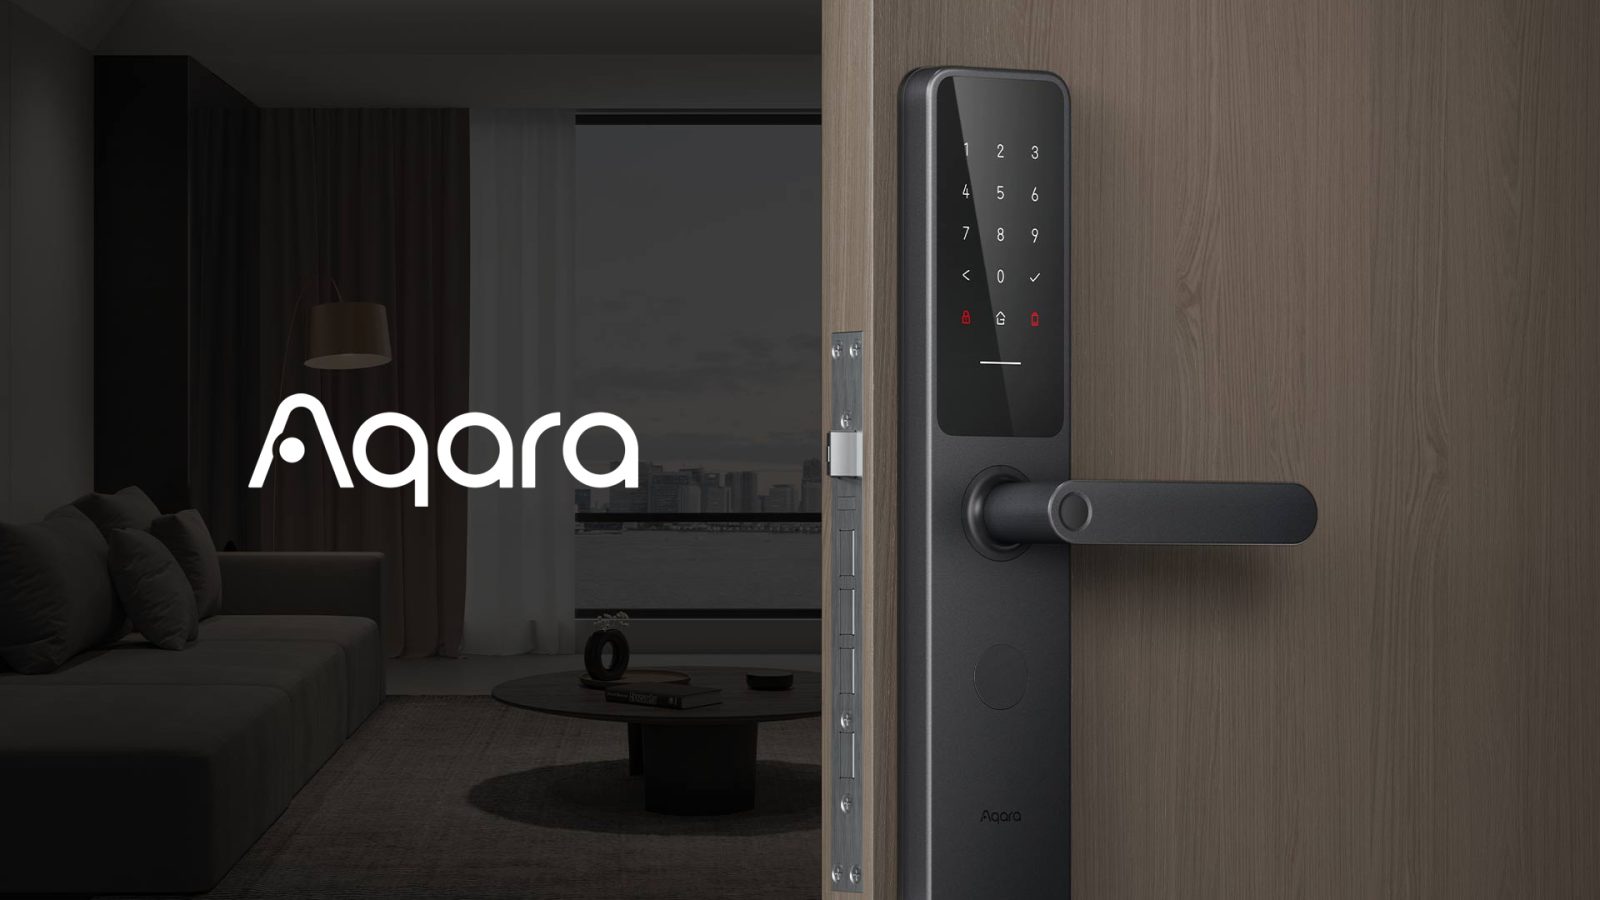 Aqara Door Lock A100 works with HomeKit and Home Key